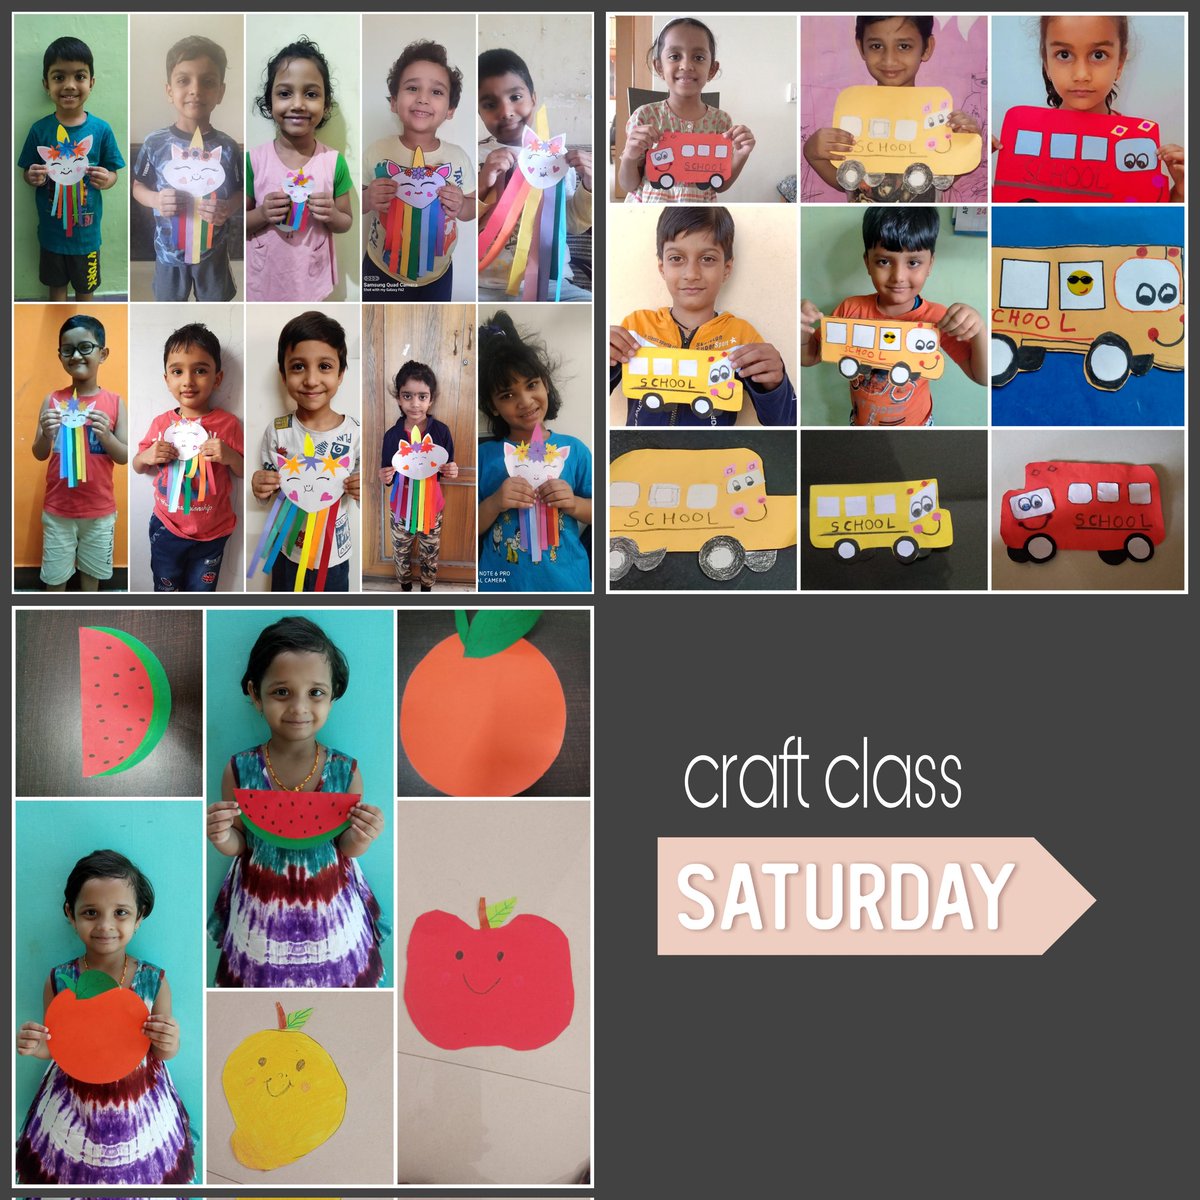 #create beautiful things that bring #JOY & #happiness 😊
#saturdayfun craft class 
#Creative #earlychildhood #craftactivity #preschoolers #Kindergarten #EducationForAll #positivity